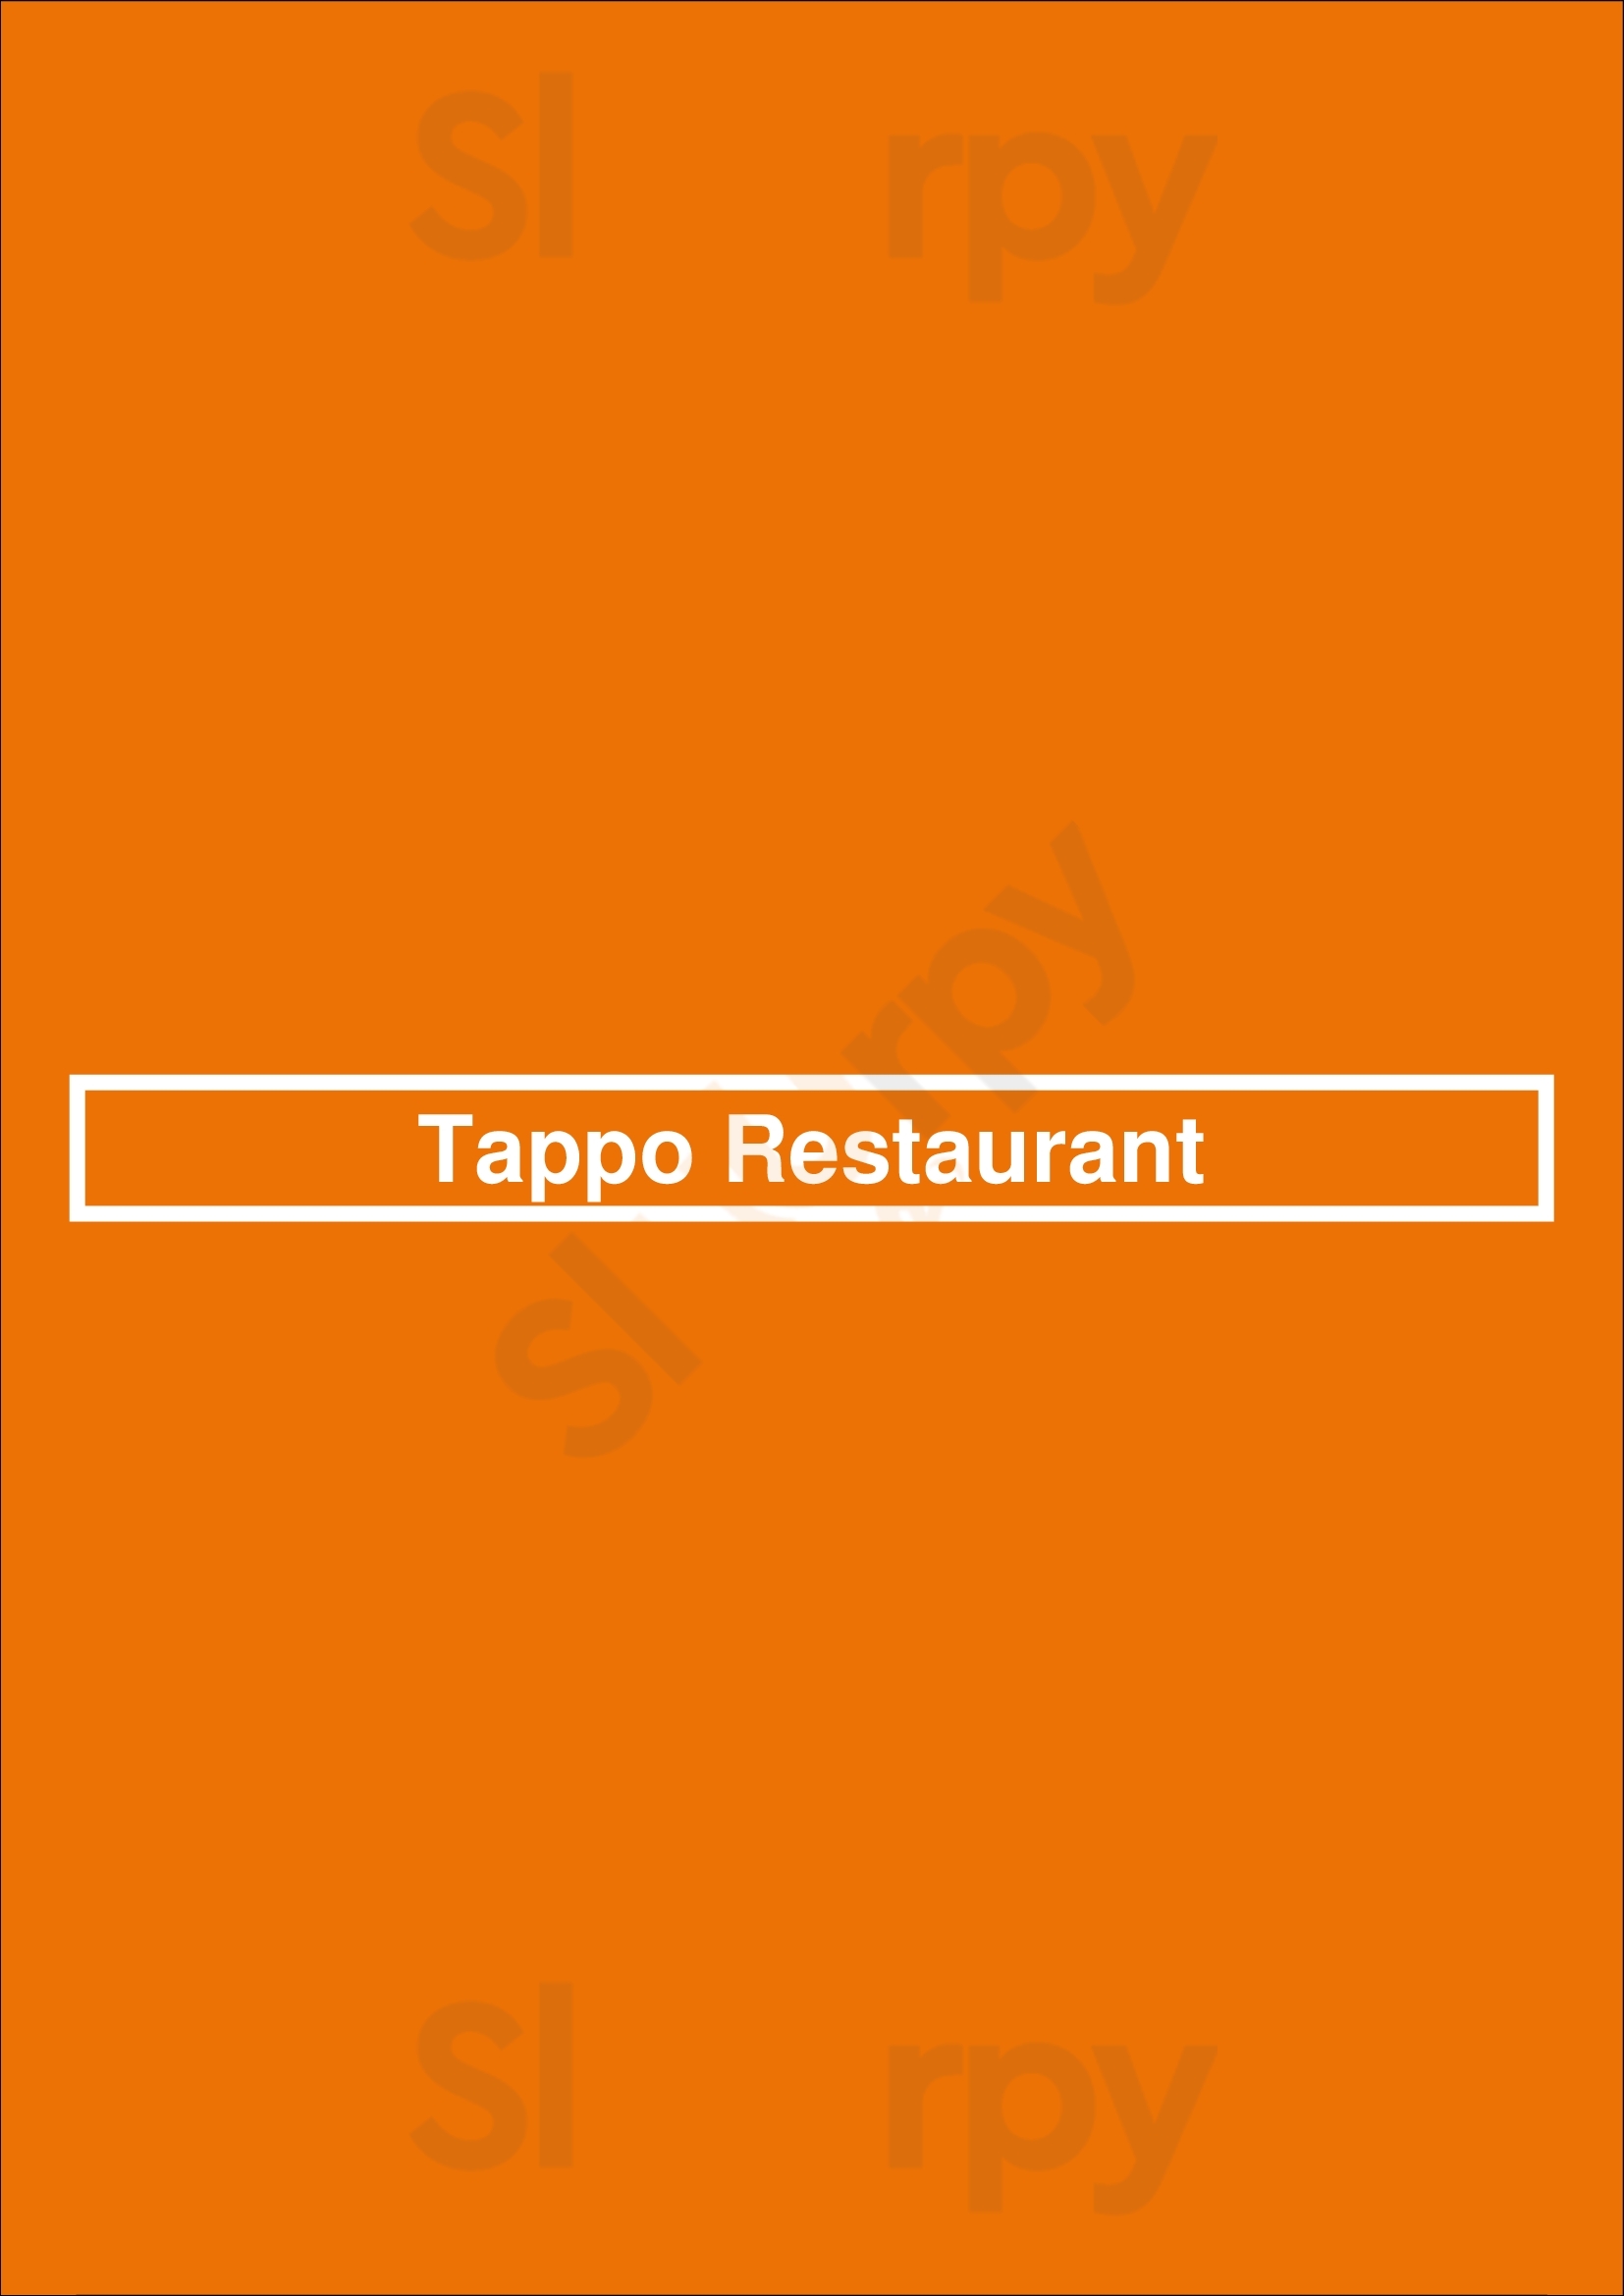 Tappo Restaurant Buffalo Menu - 1